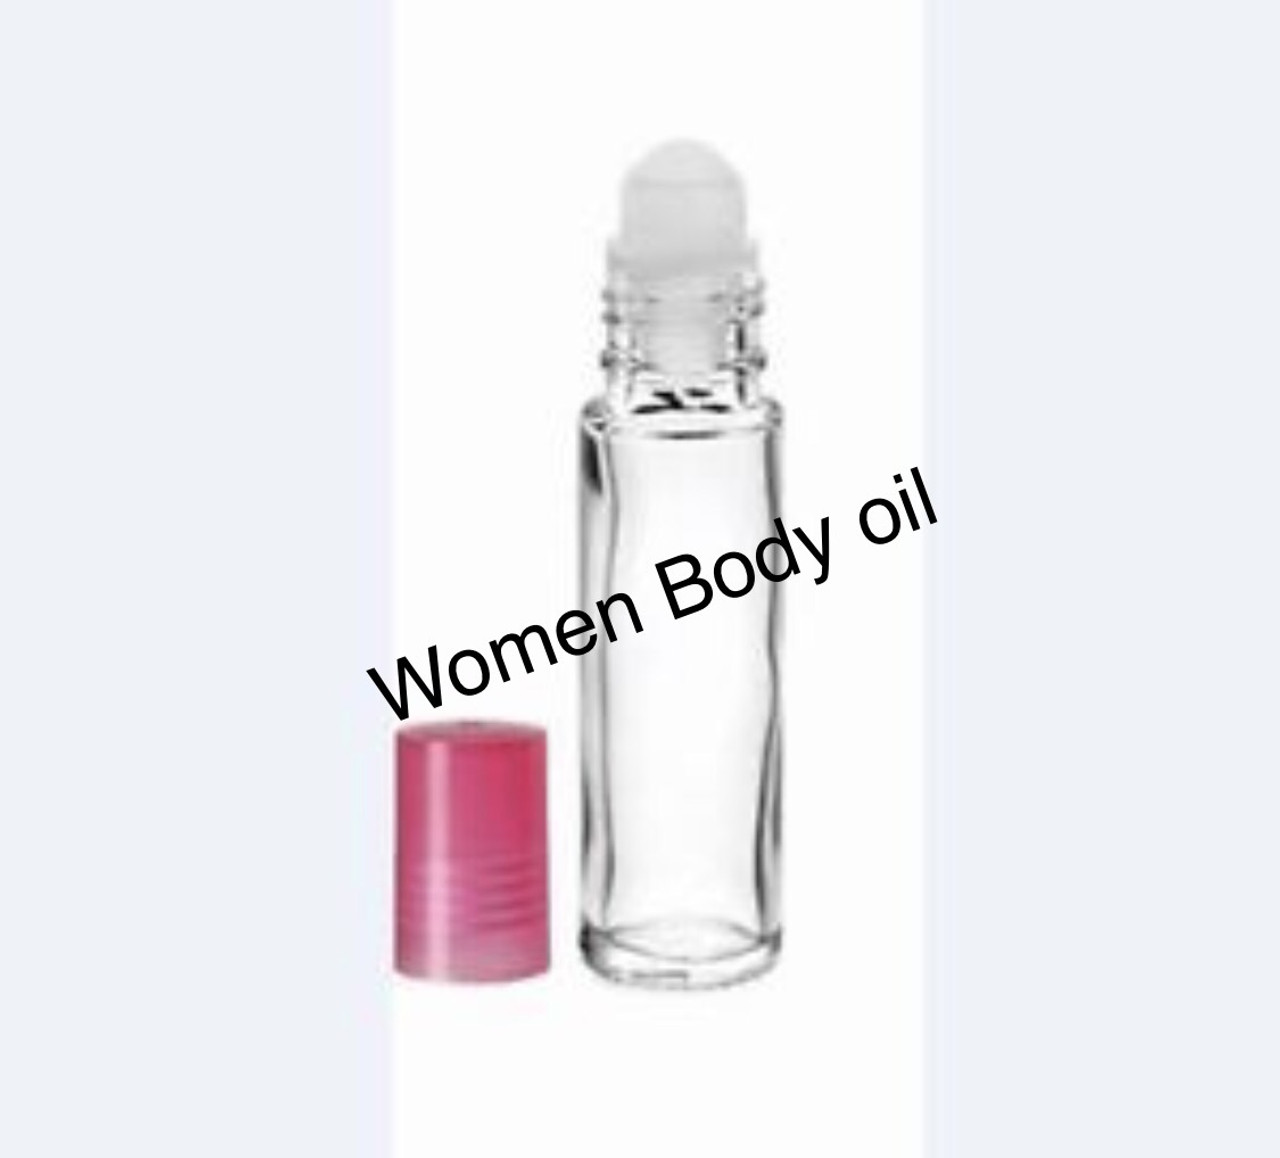 Black Woman Unique Perfume/body Oil 7 Sizes Free Shipping 